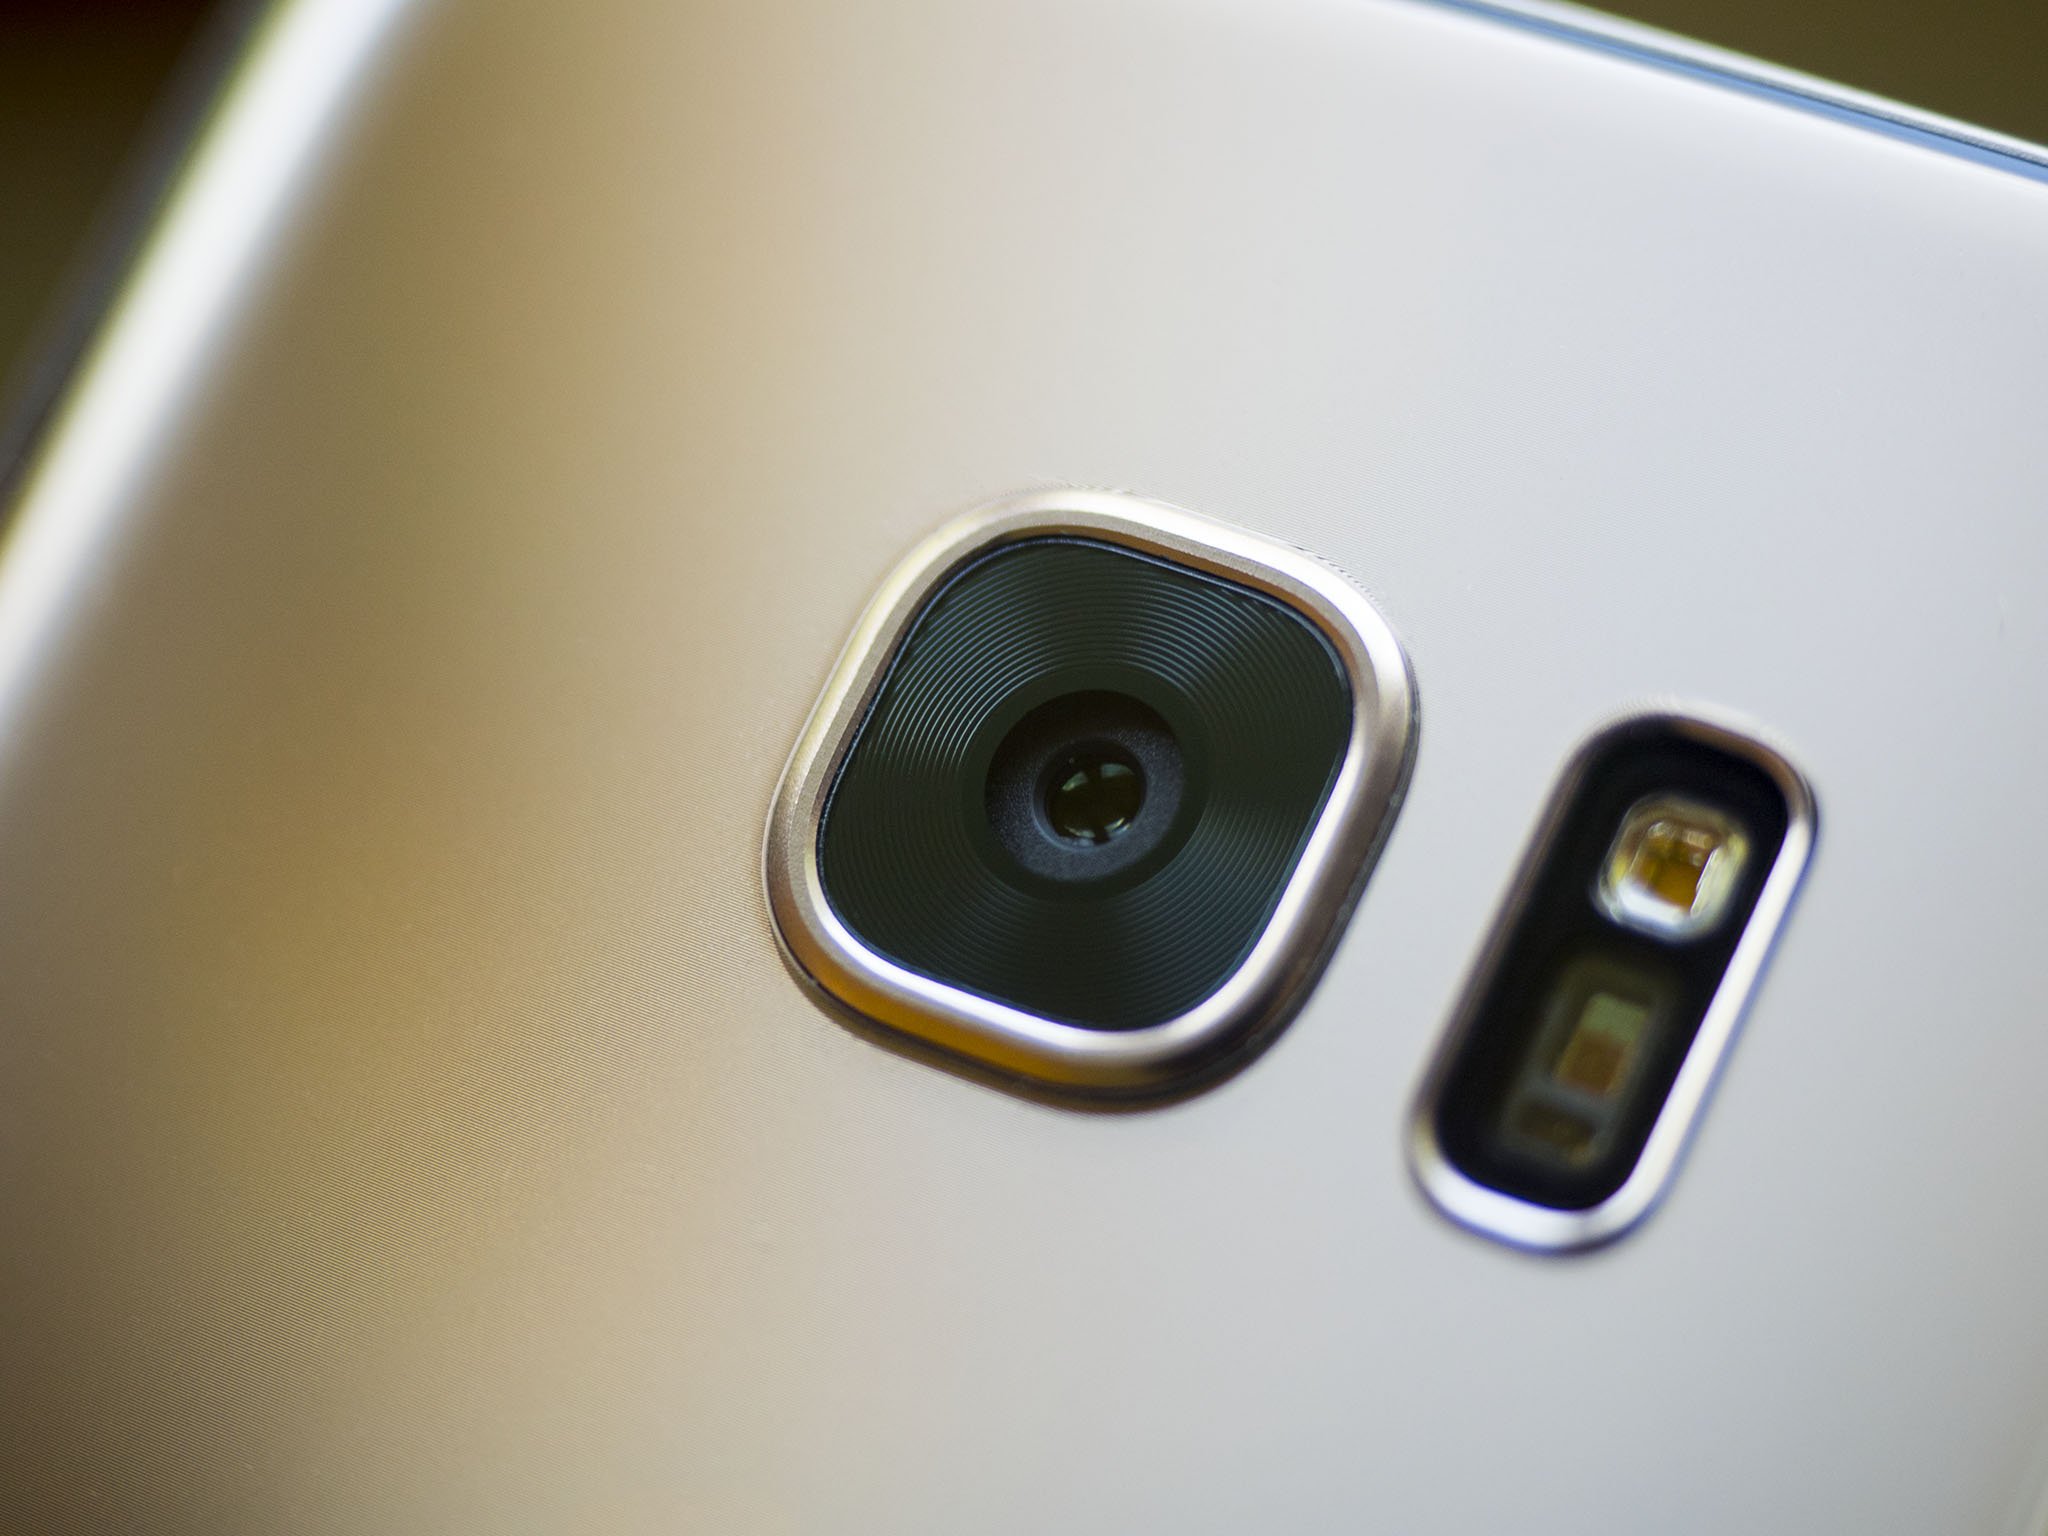 Samsung Galaxy S7 camera